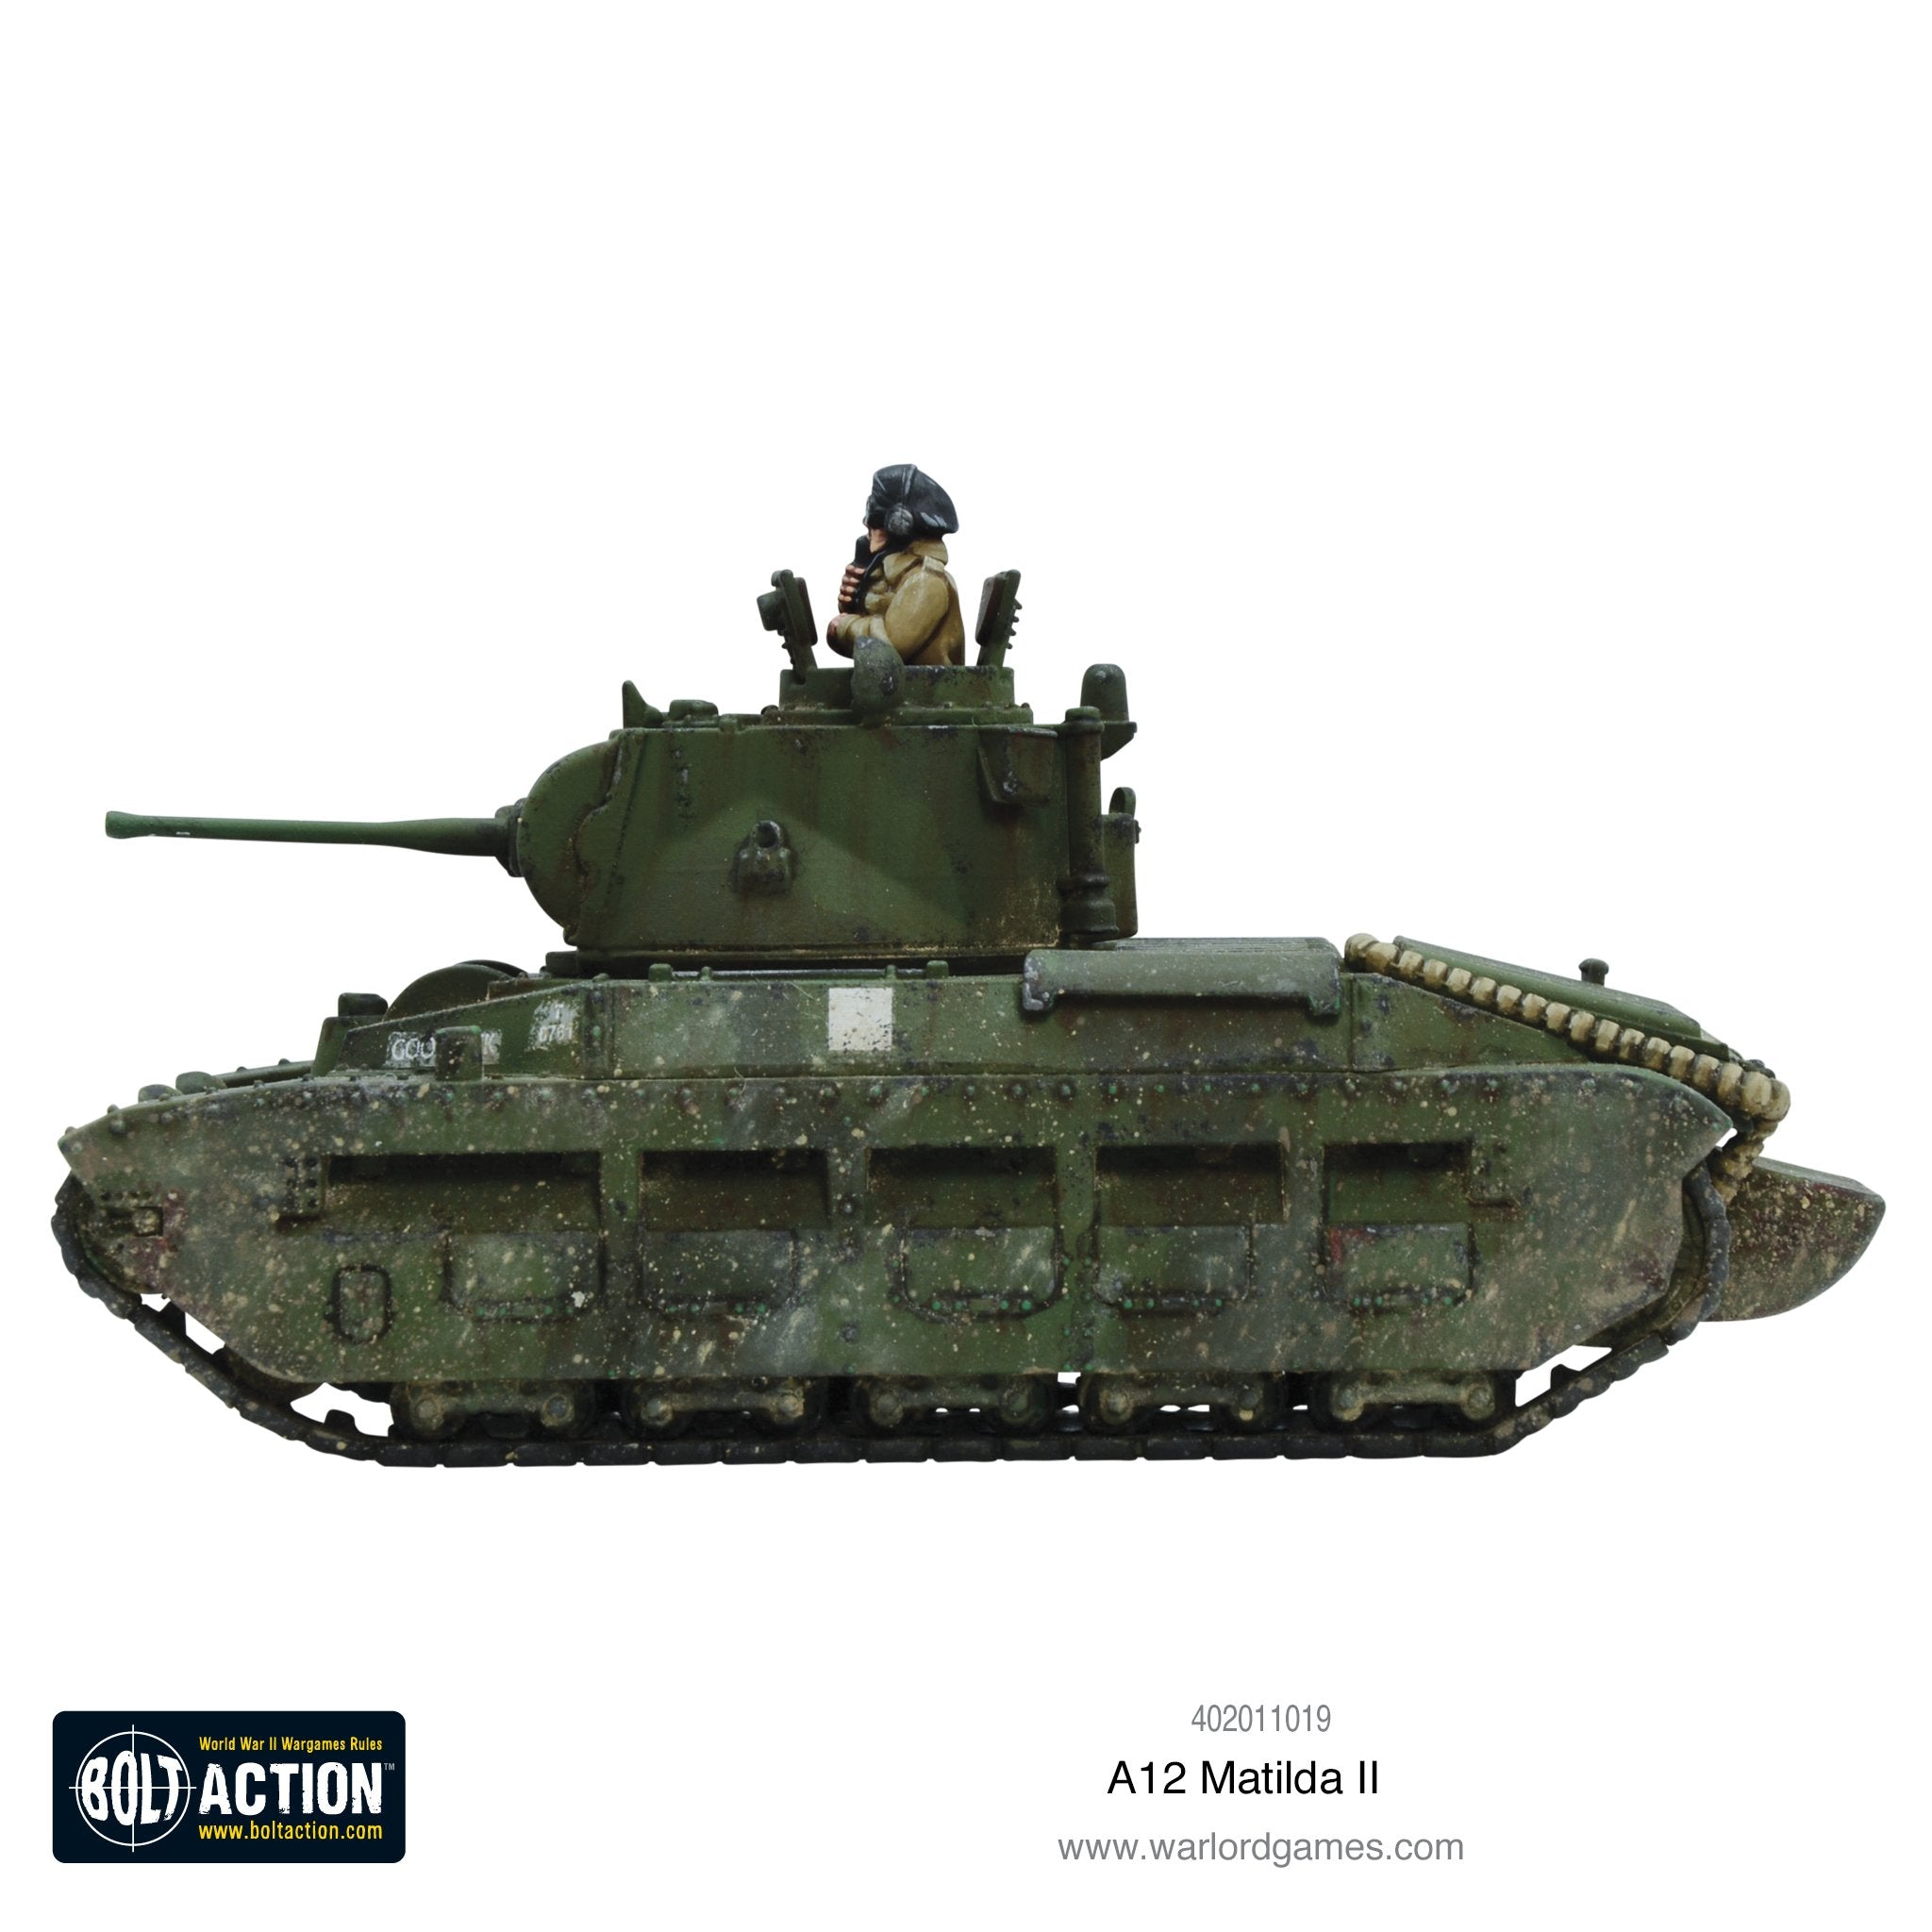 A12 Matilda II infantry tank